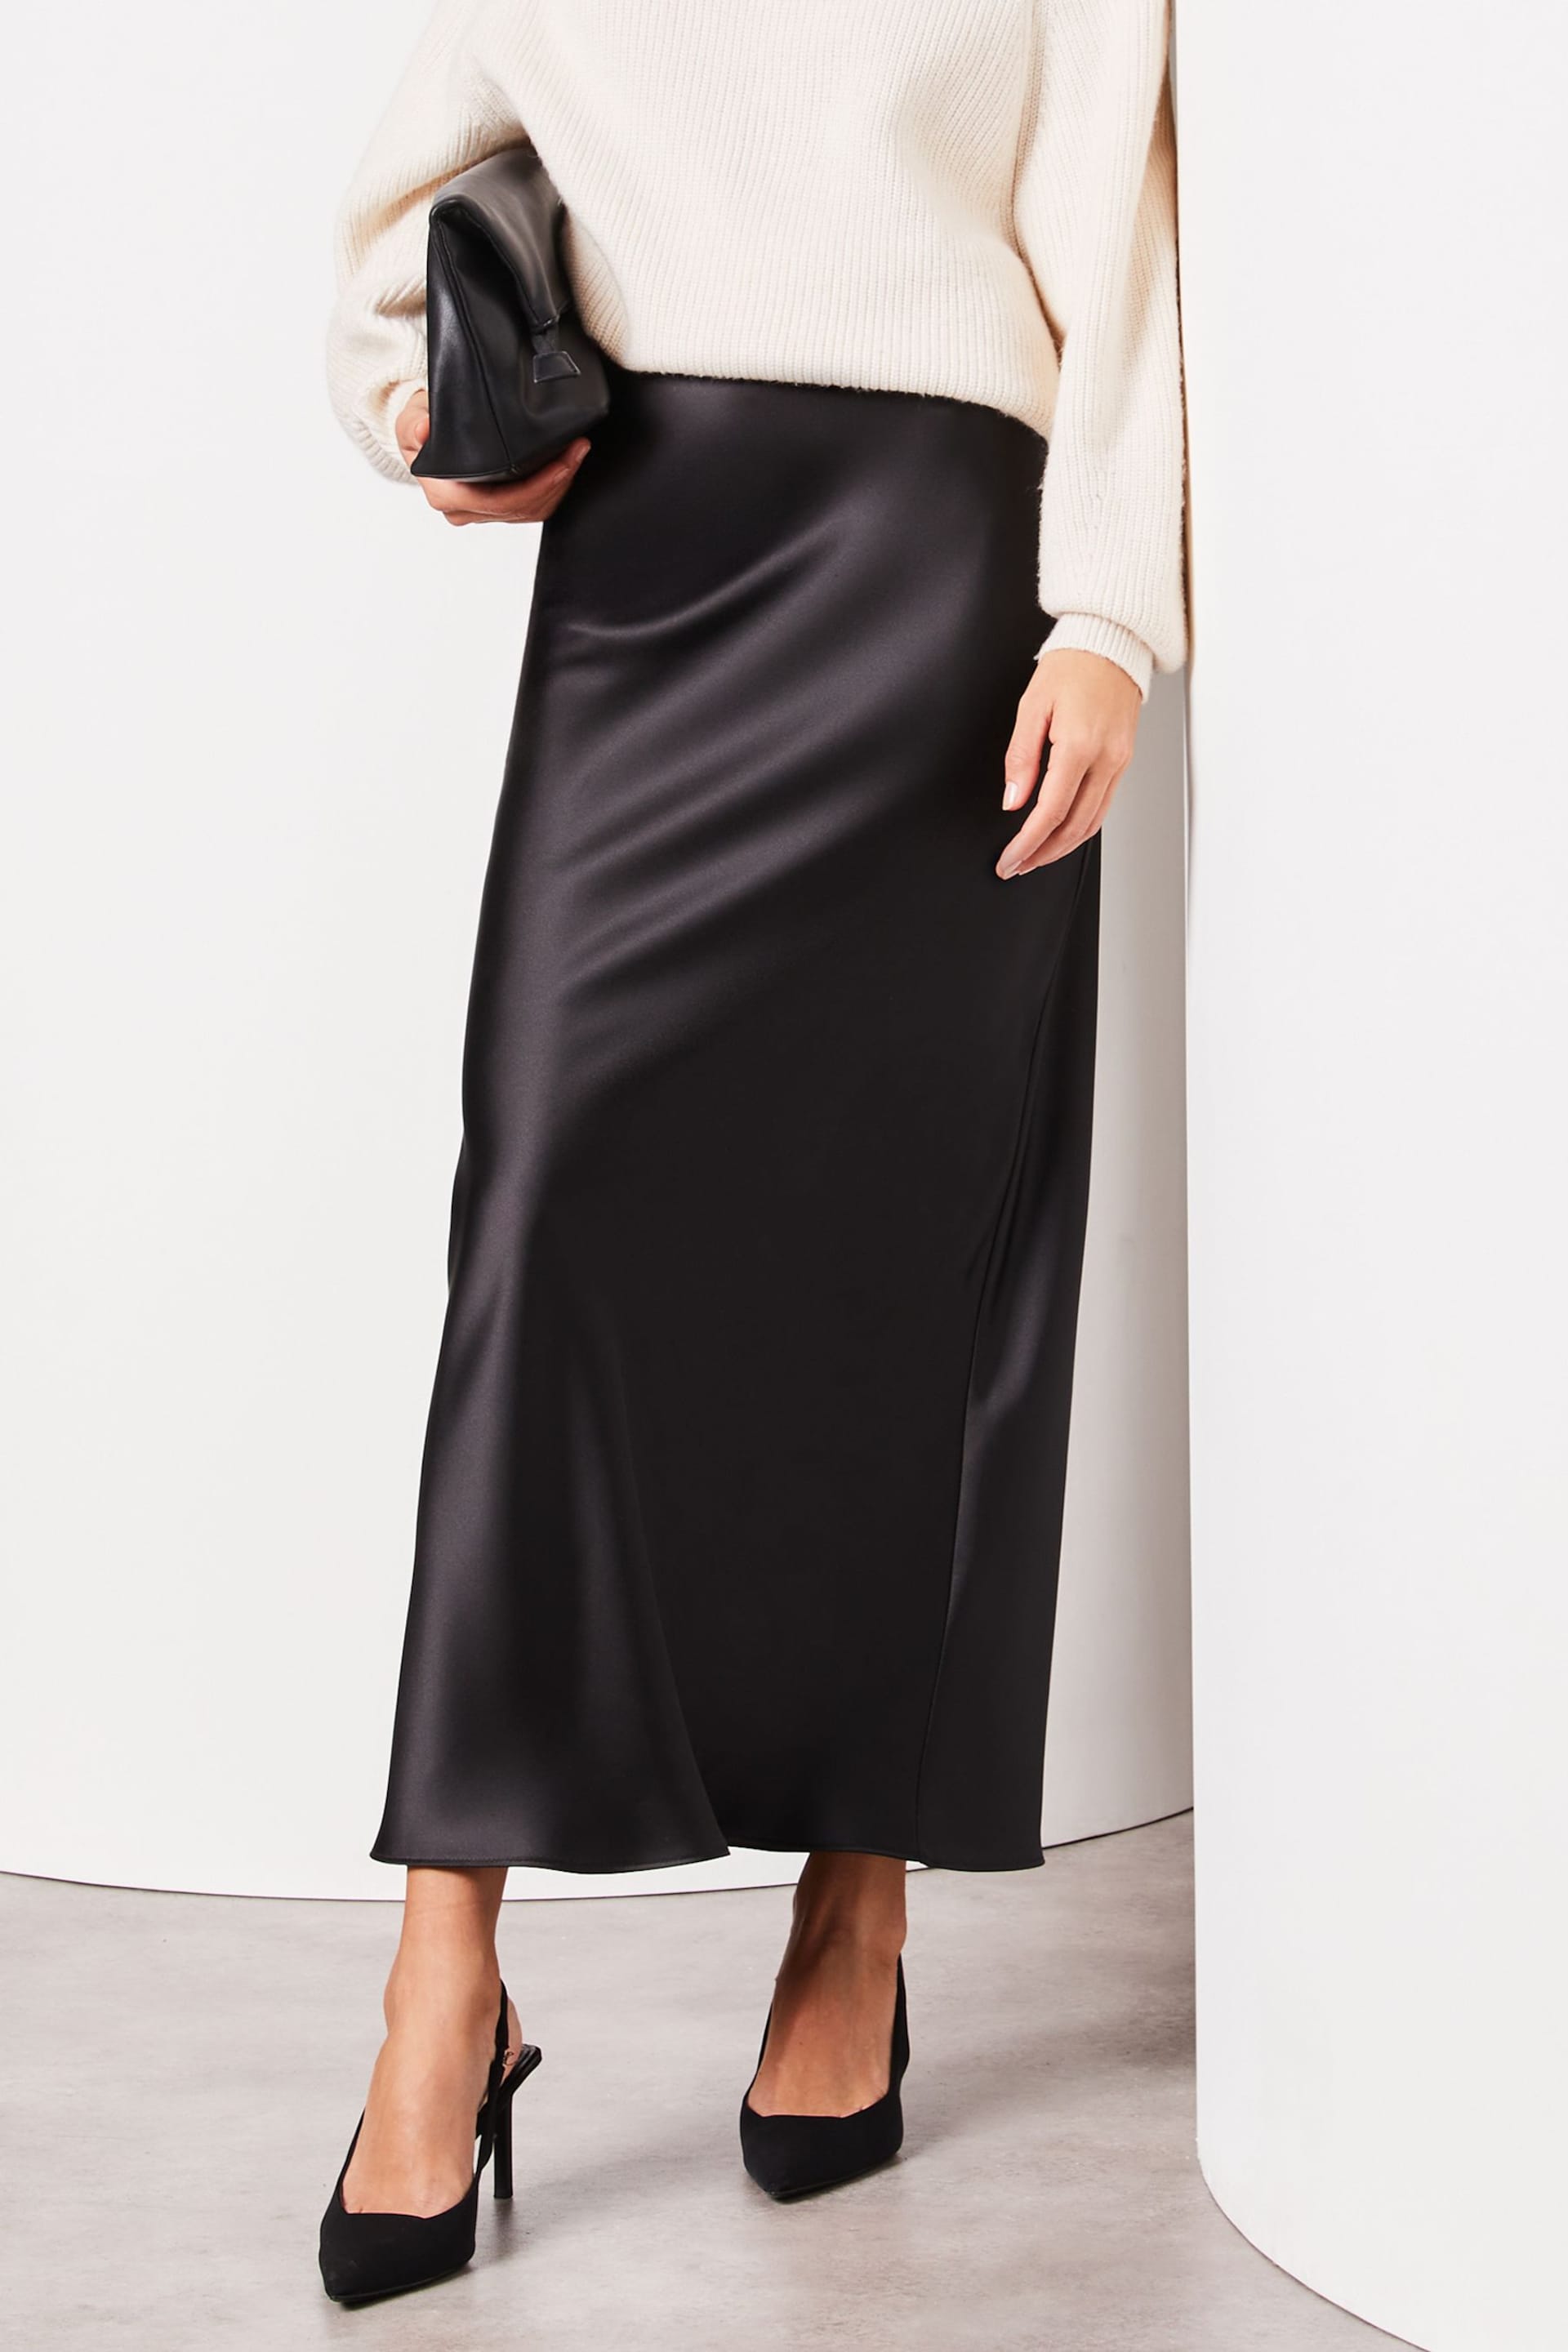 Lipsy Black Maxi Satin Skirt - Image 1 of 4